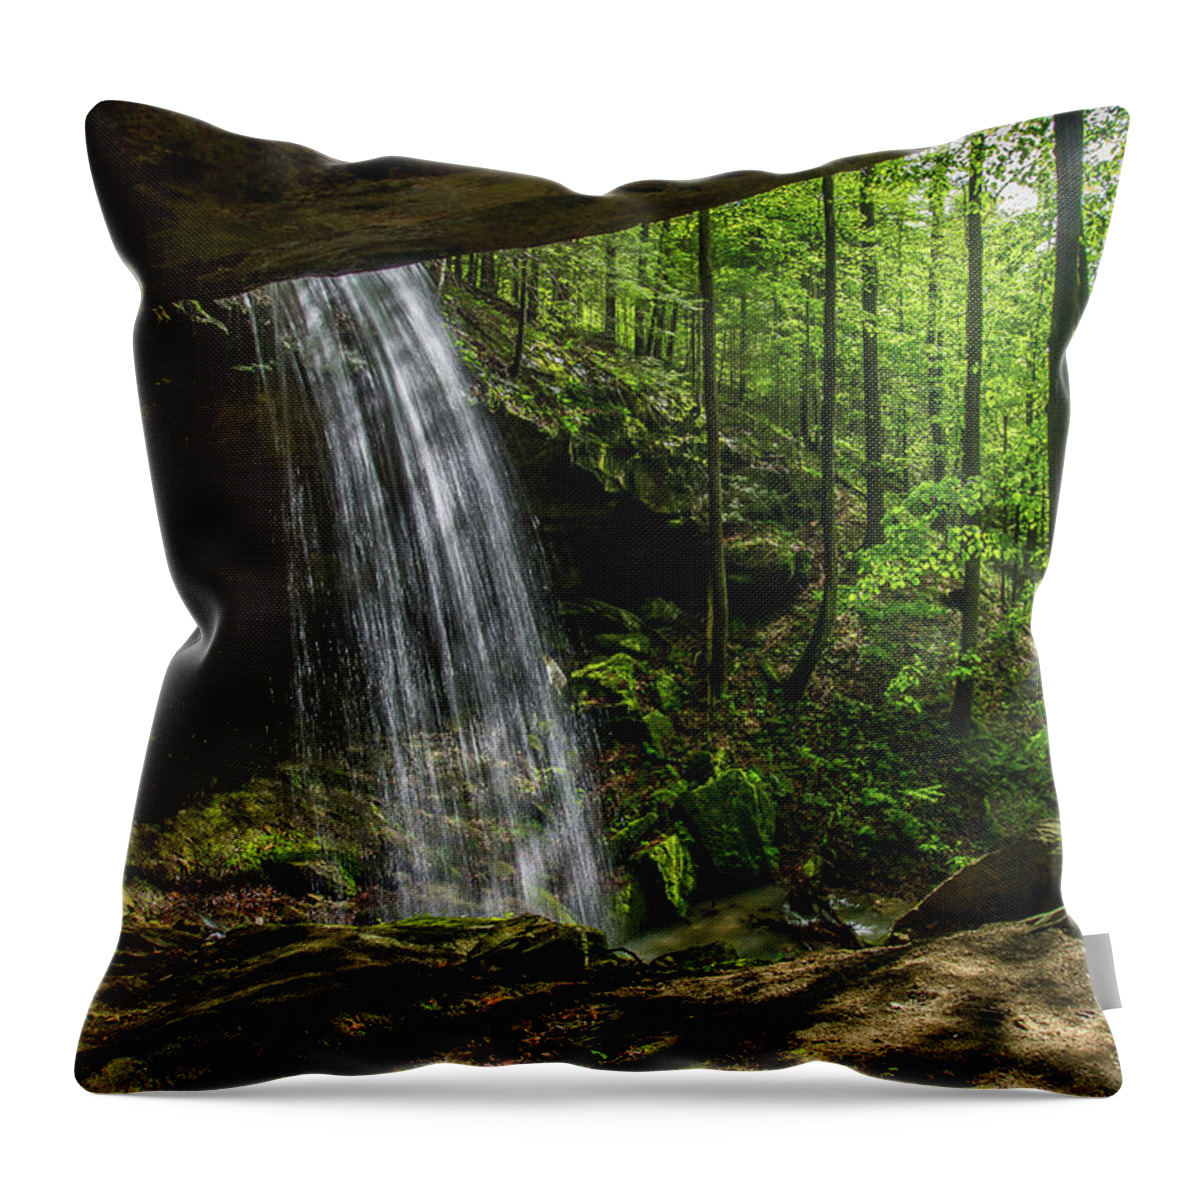 Alcorn Falls Throw Pillow featuring the photograph Alcorn Falls by Ulrich Burkhalter